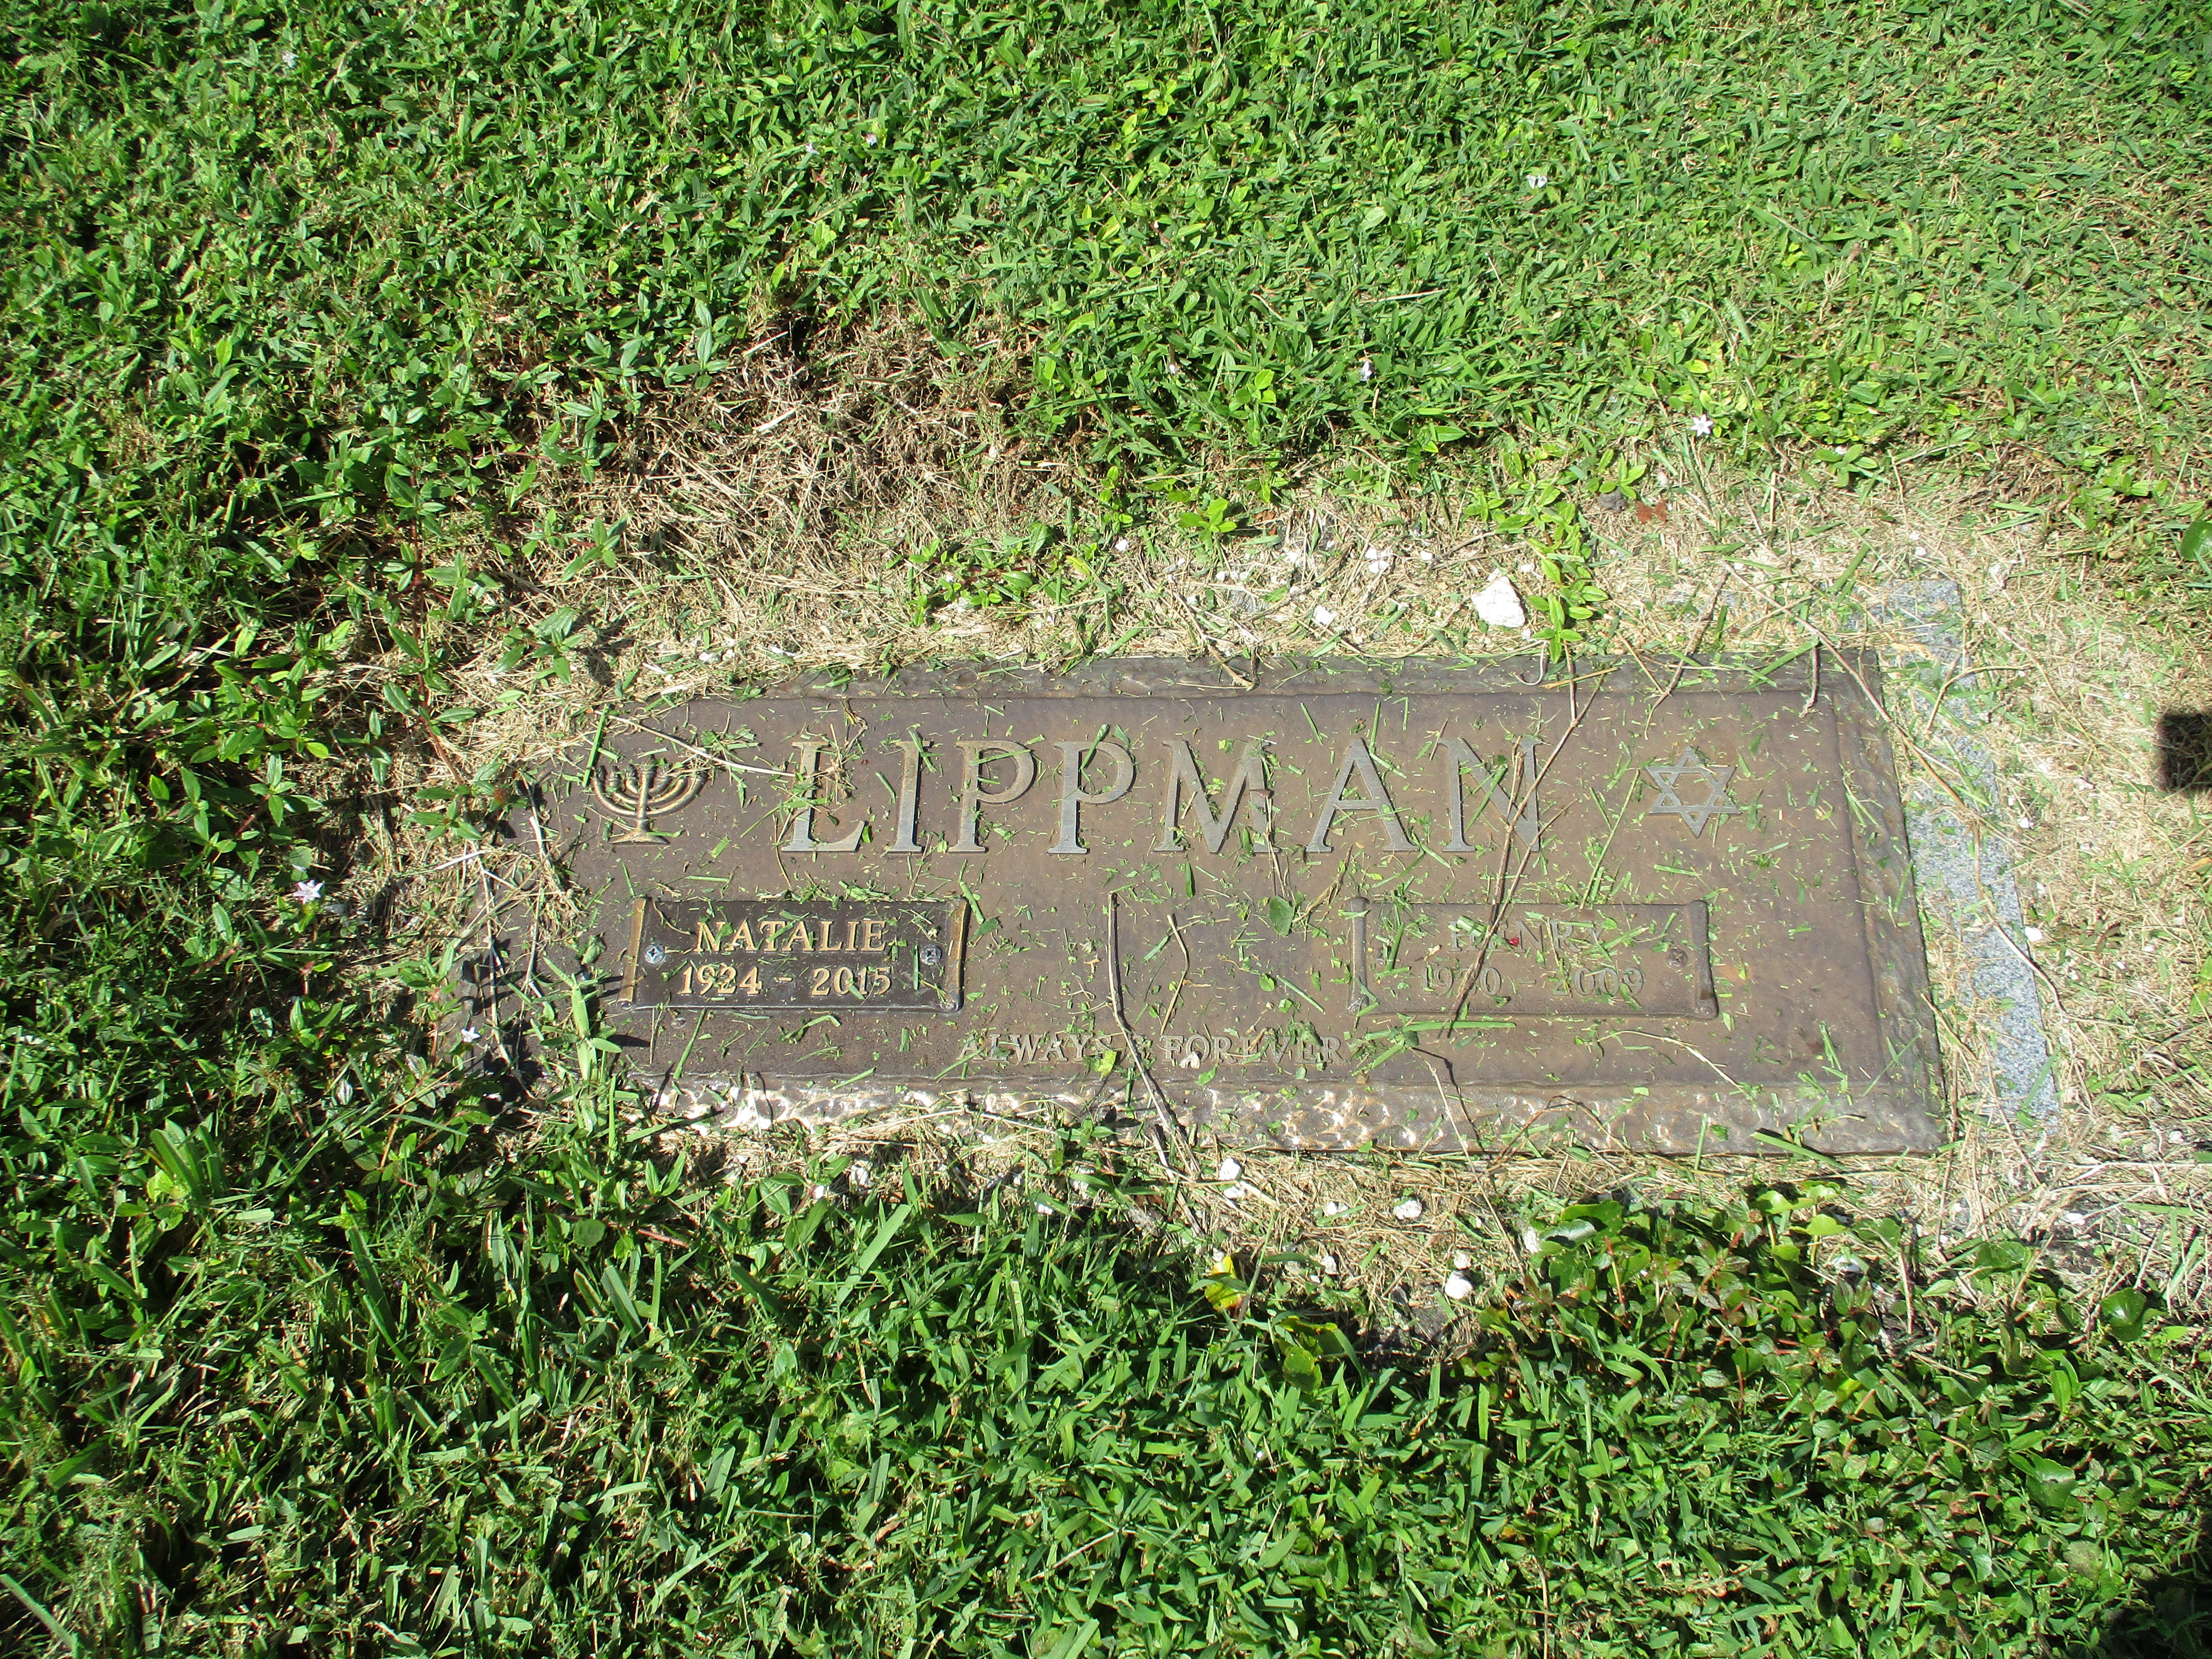 Henry Lippman